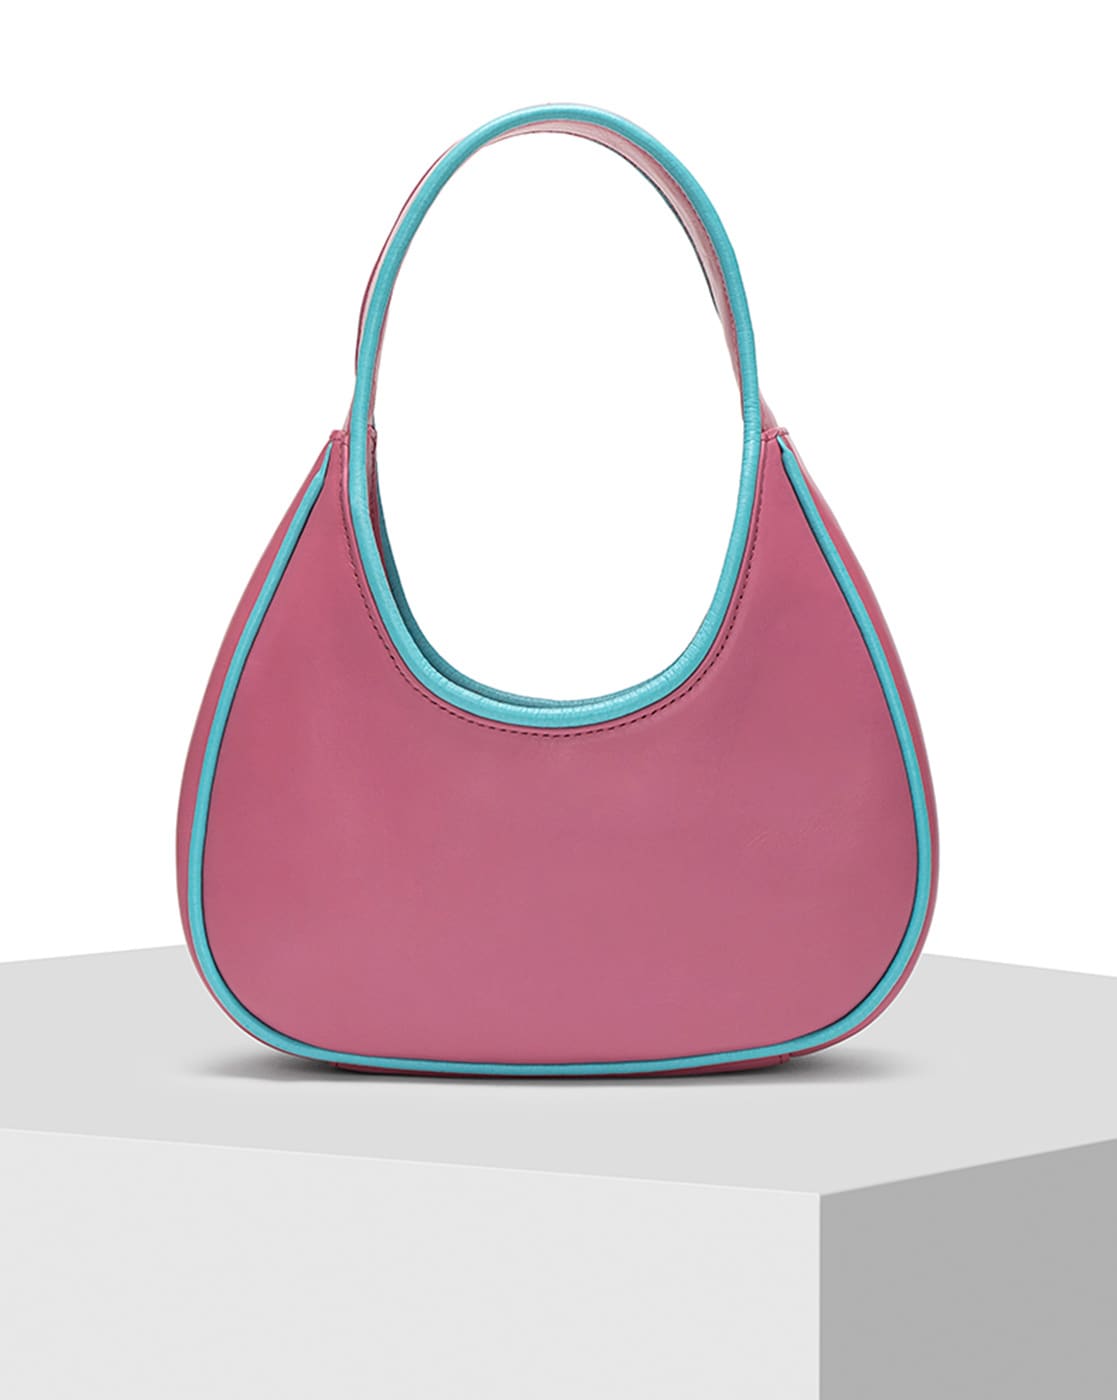 Hobo Handbags For Every Style | BRAHMIN